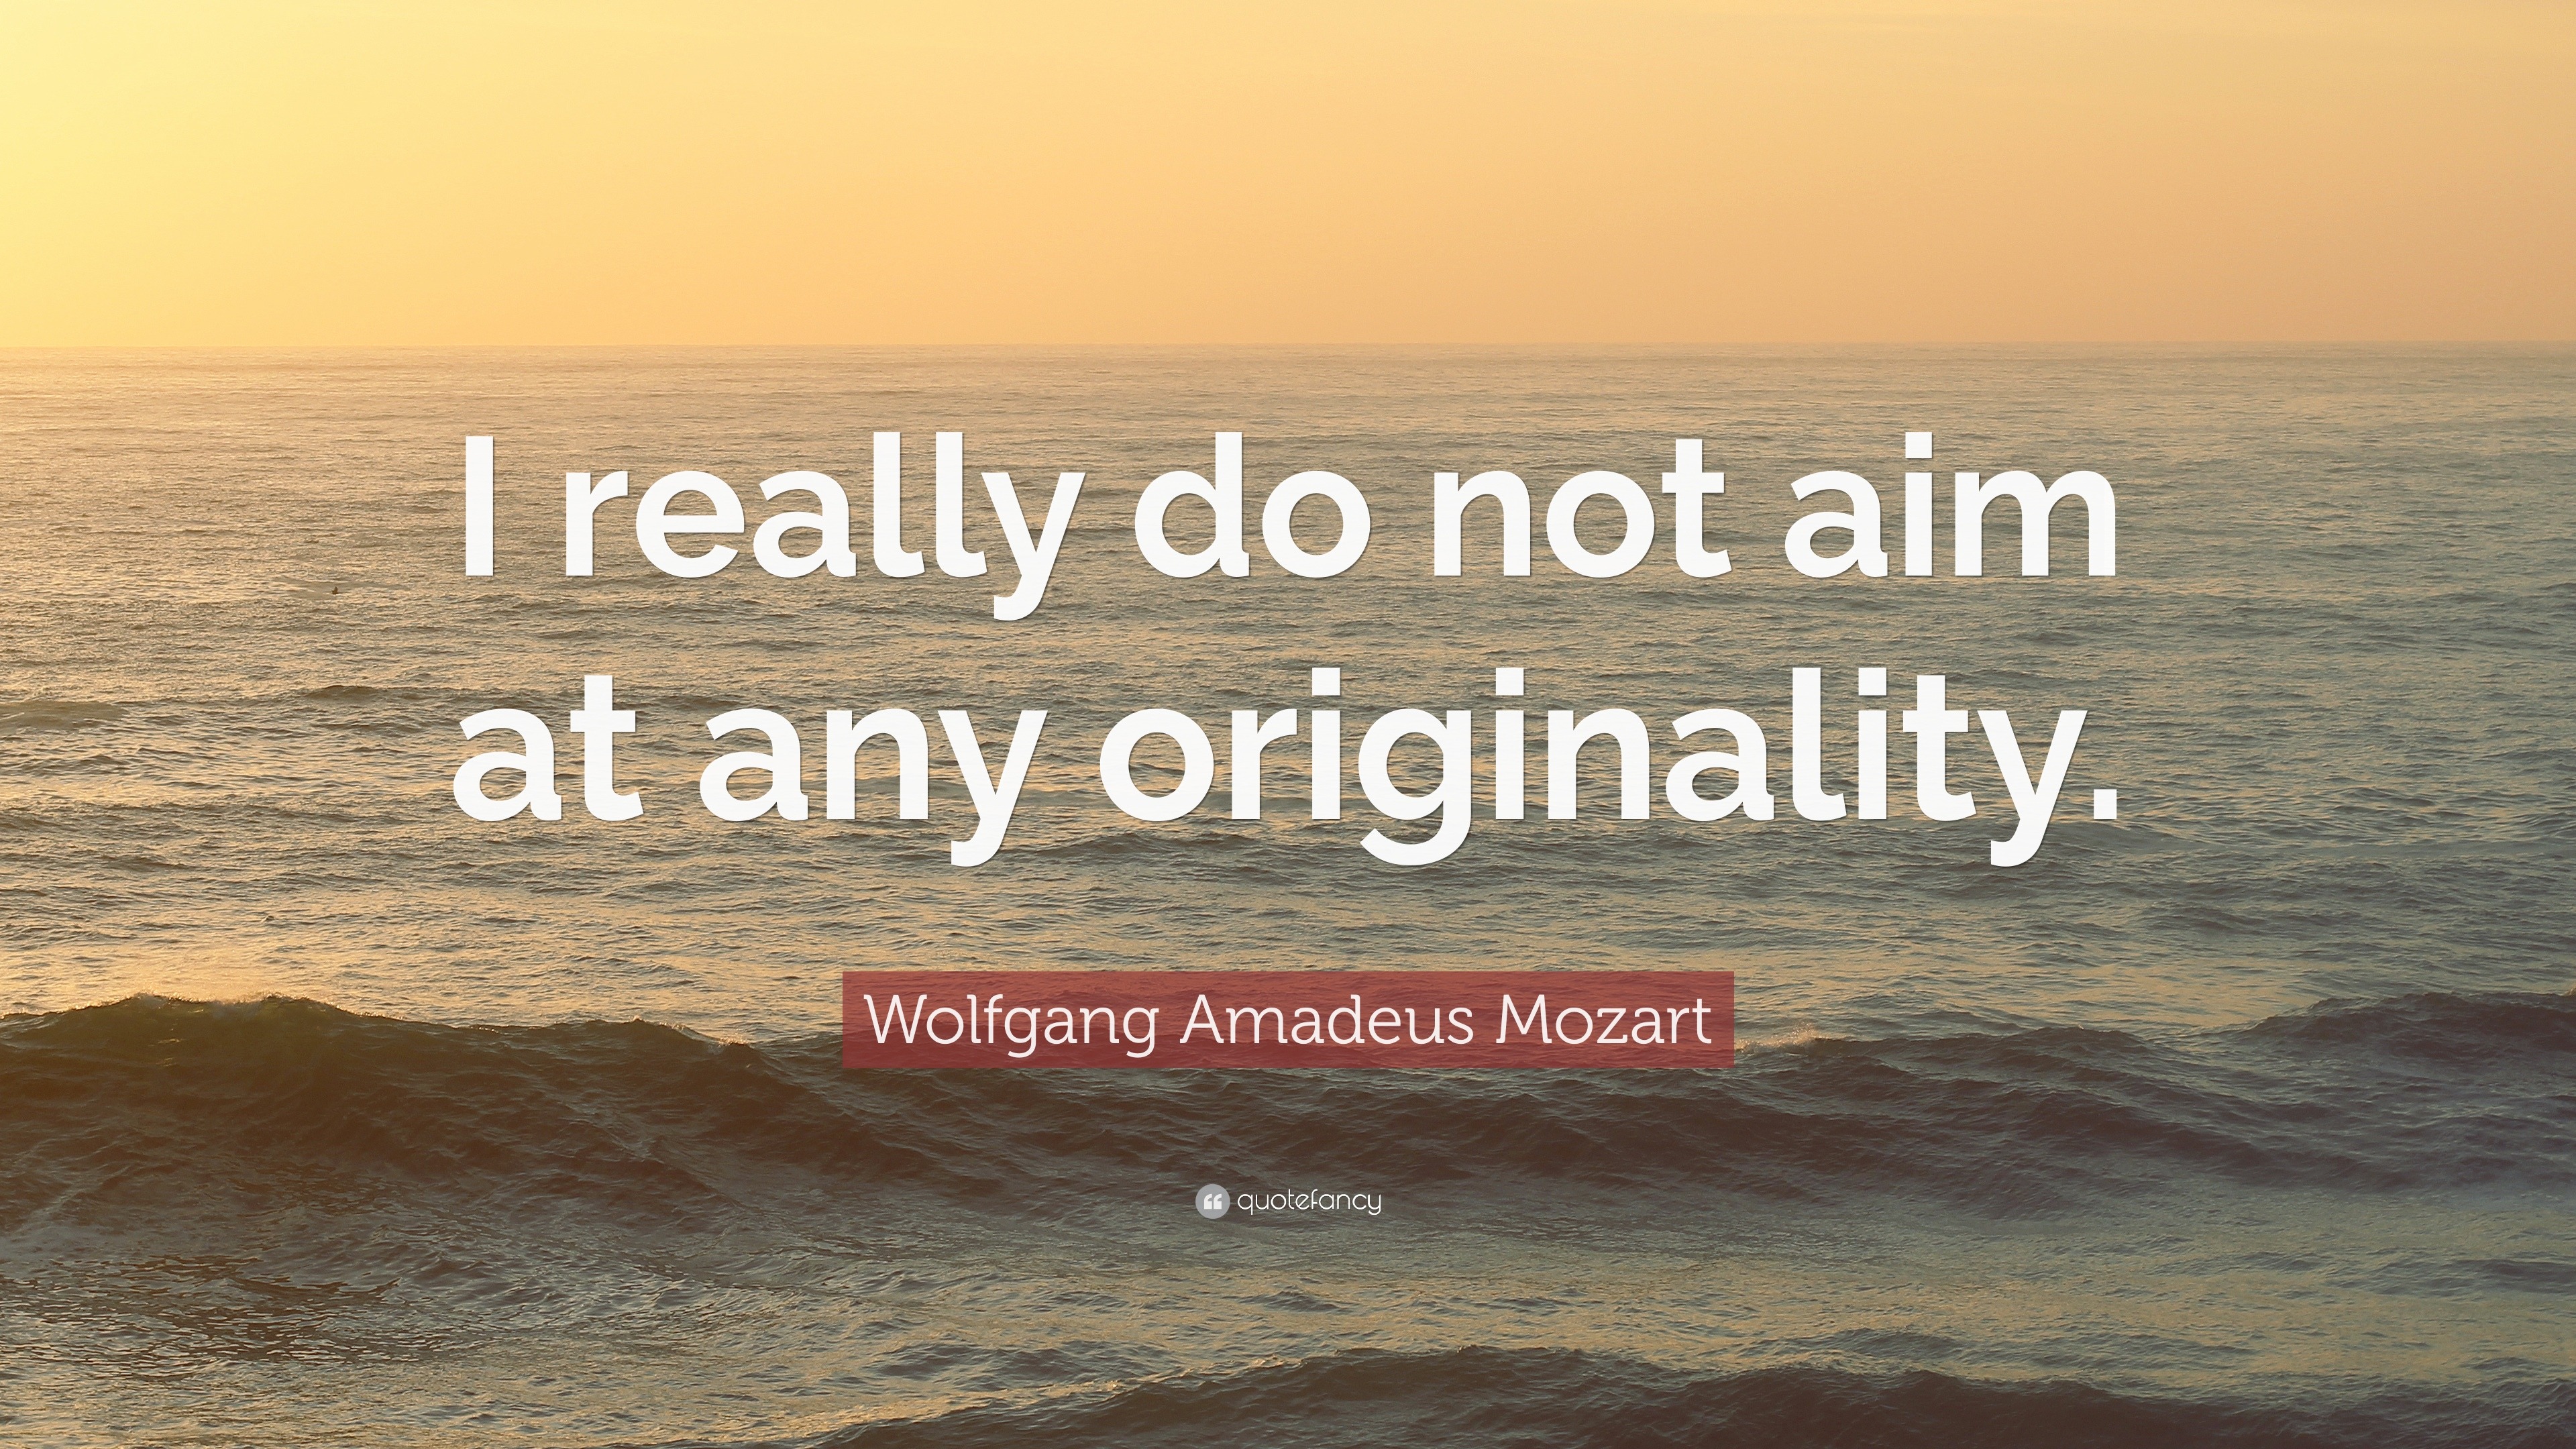 Wolfgang Amadeus Mozart Quote: “I really do not aim at any originality.”